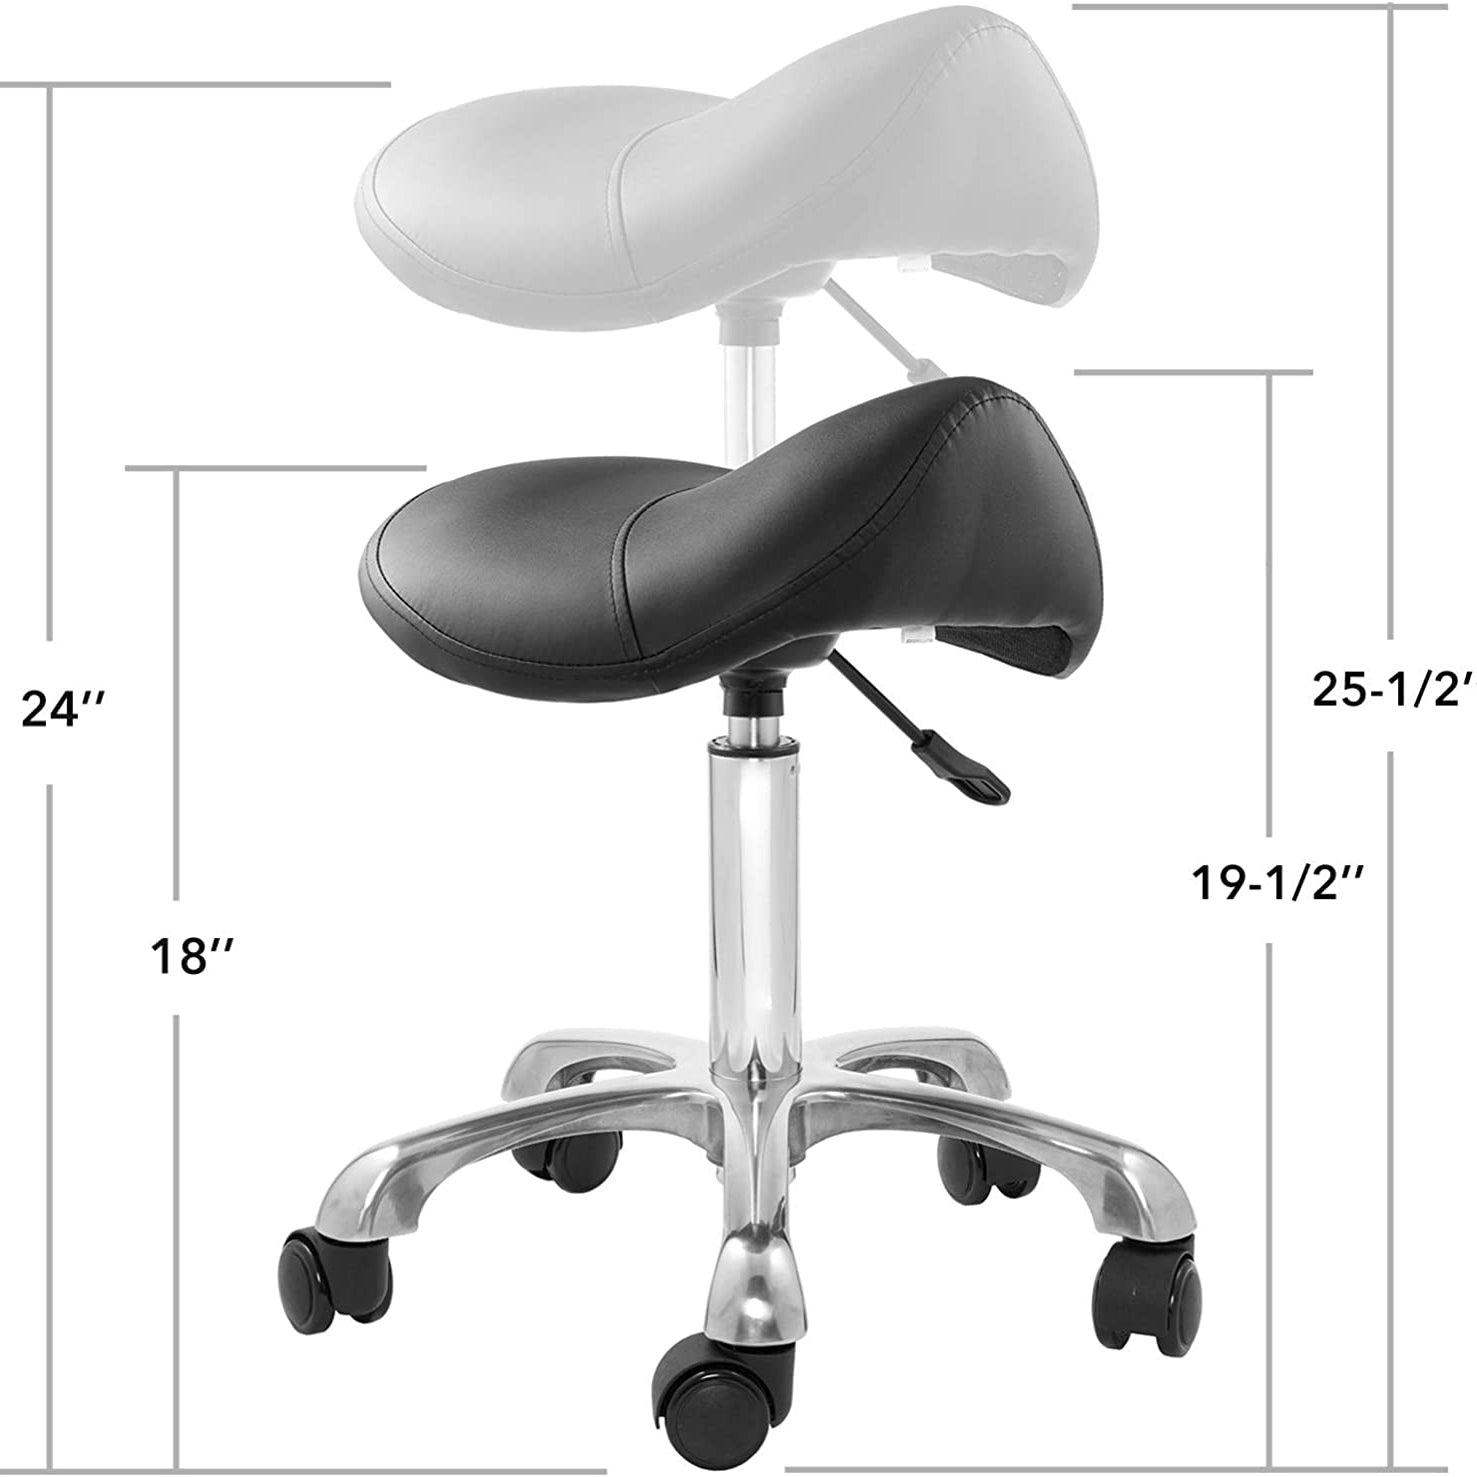 DK-98020 | Ergonomic Saddle Stool | Adjustable Hydraulic Seat - SH Salons